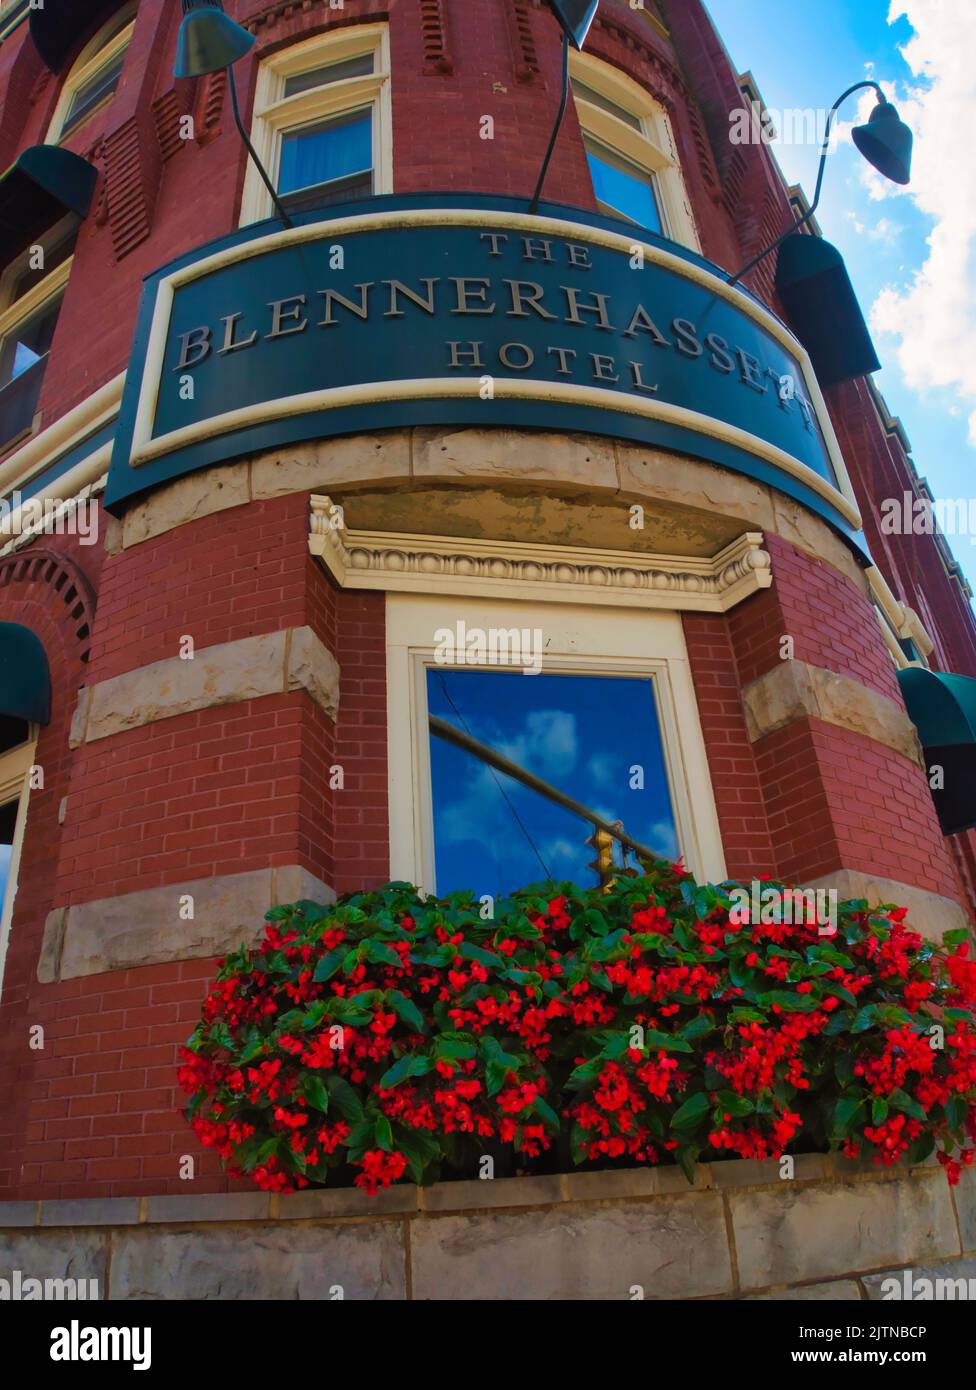 Il Blennerhassett Hotel è un hotel storico situato a Parkersburg, Wood County, West Virginia. Foto Stock